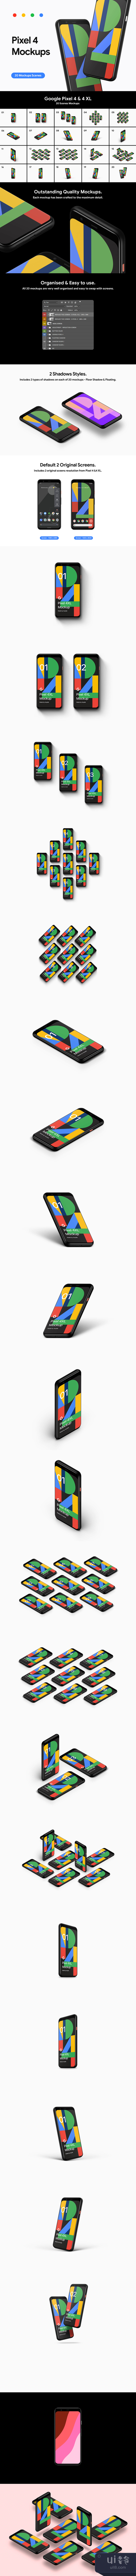 谷歌Pixel 4 - 20个模型 (Google Pixel 4 - 20 Mockups)插图